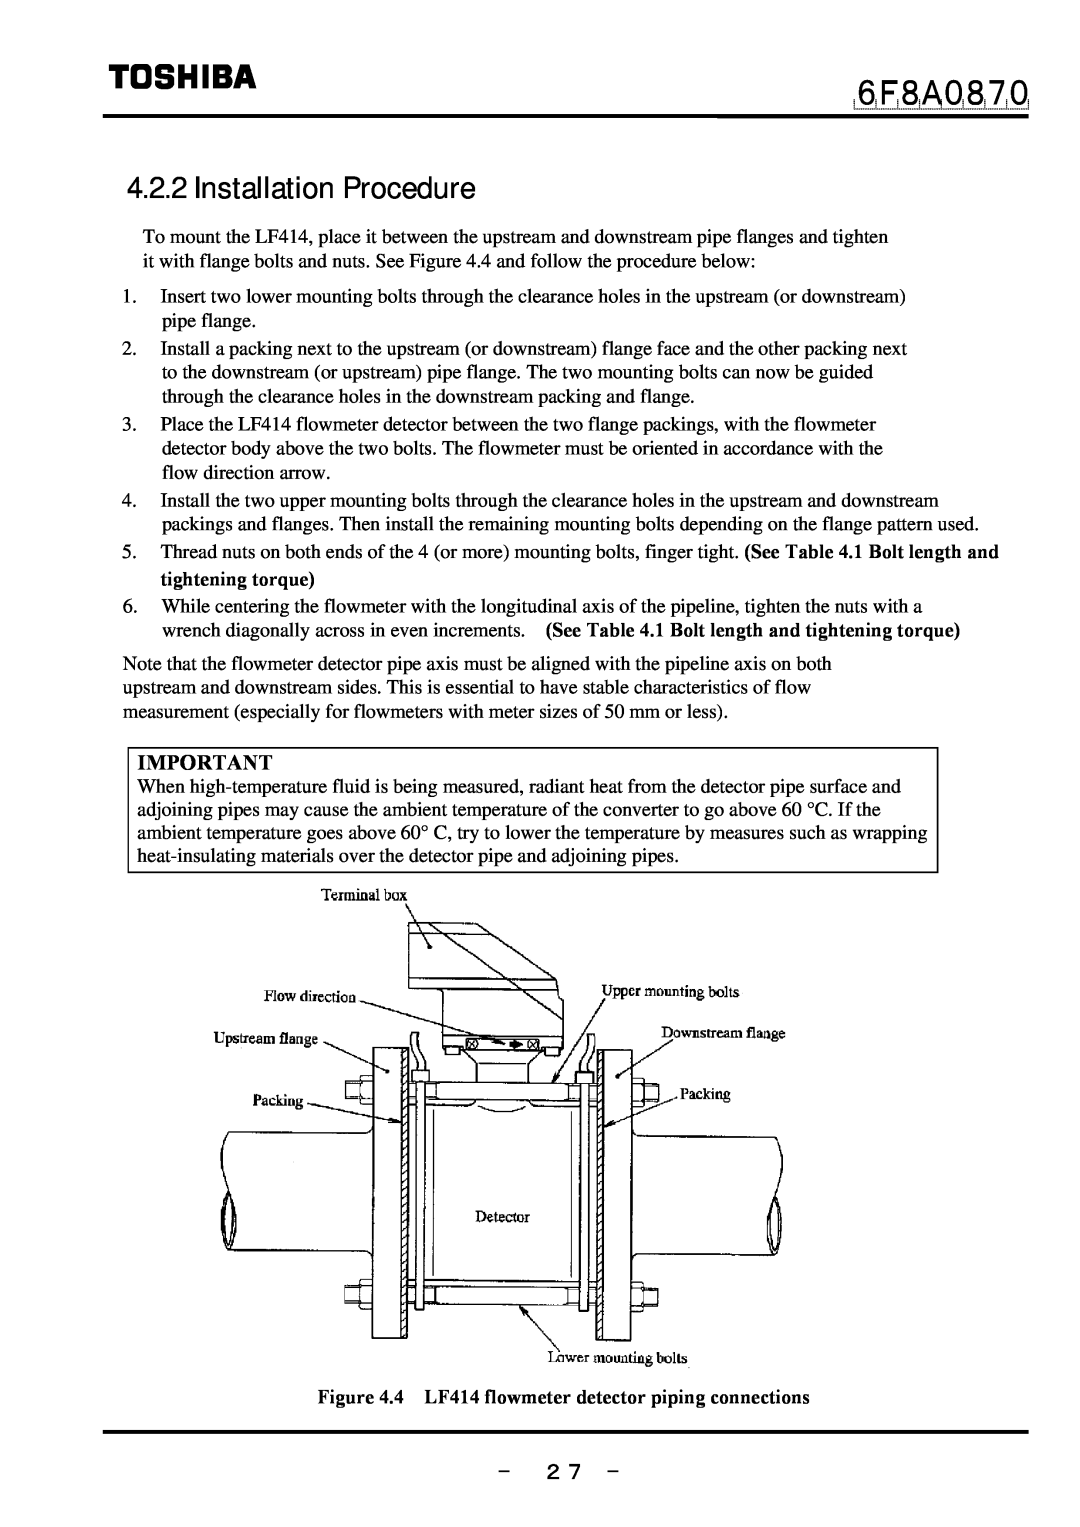 Toshiba manual Installation Procedure, － ２７ －, ６Ｆ８Ａ０８７０, 4 LF414 flowmeter detector piping connections 